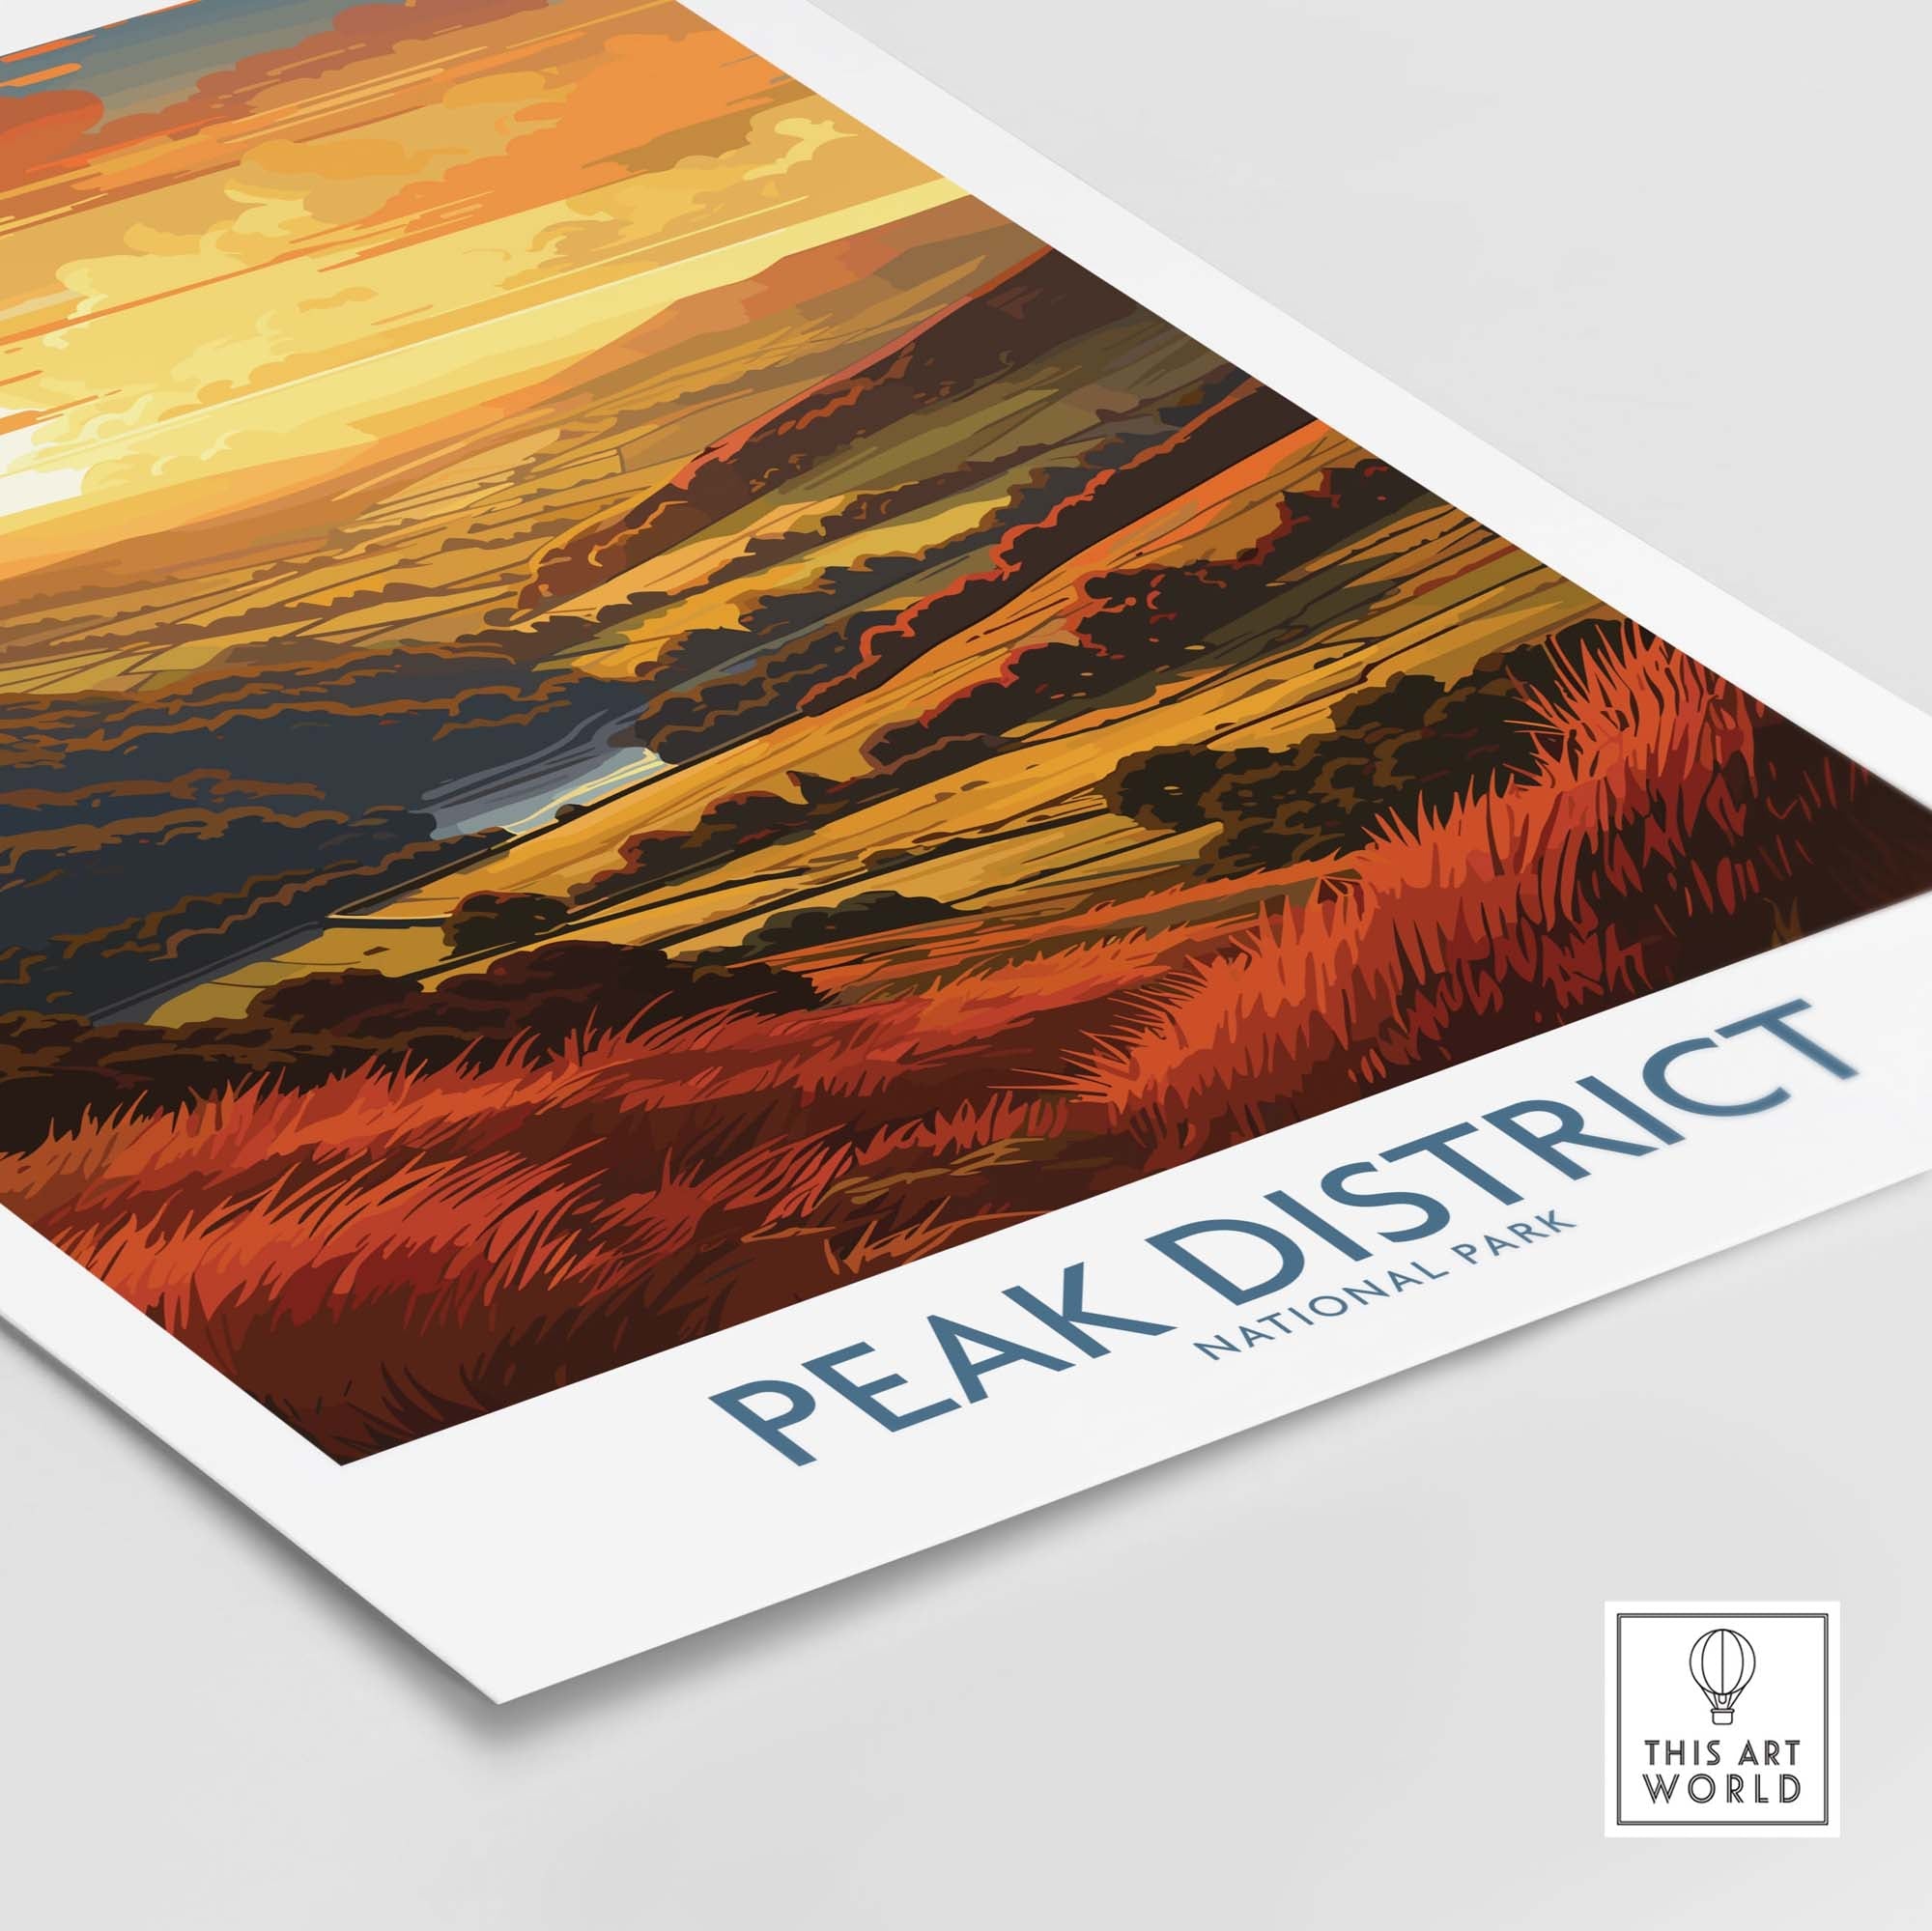 Peak District National Park Poster